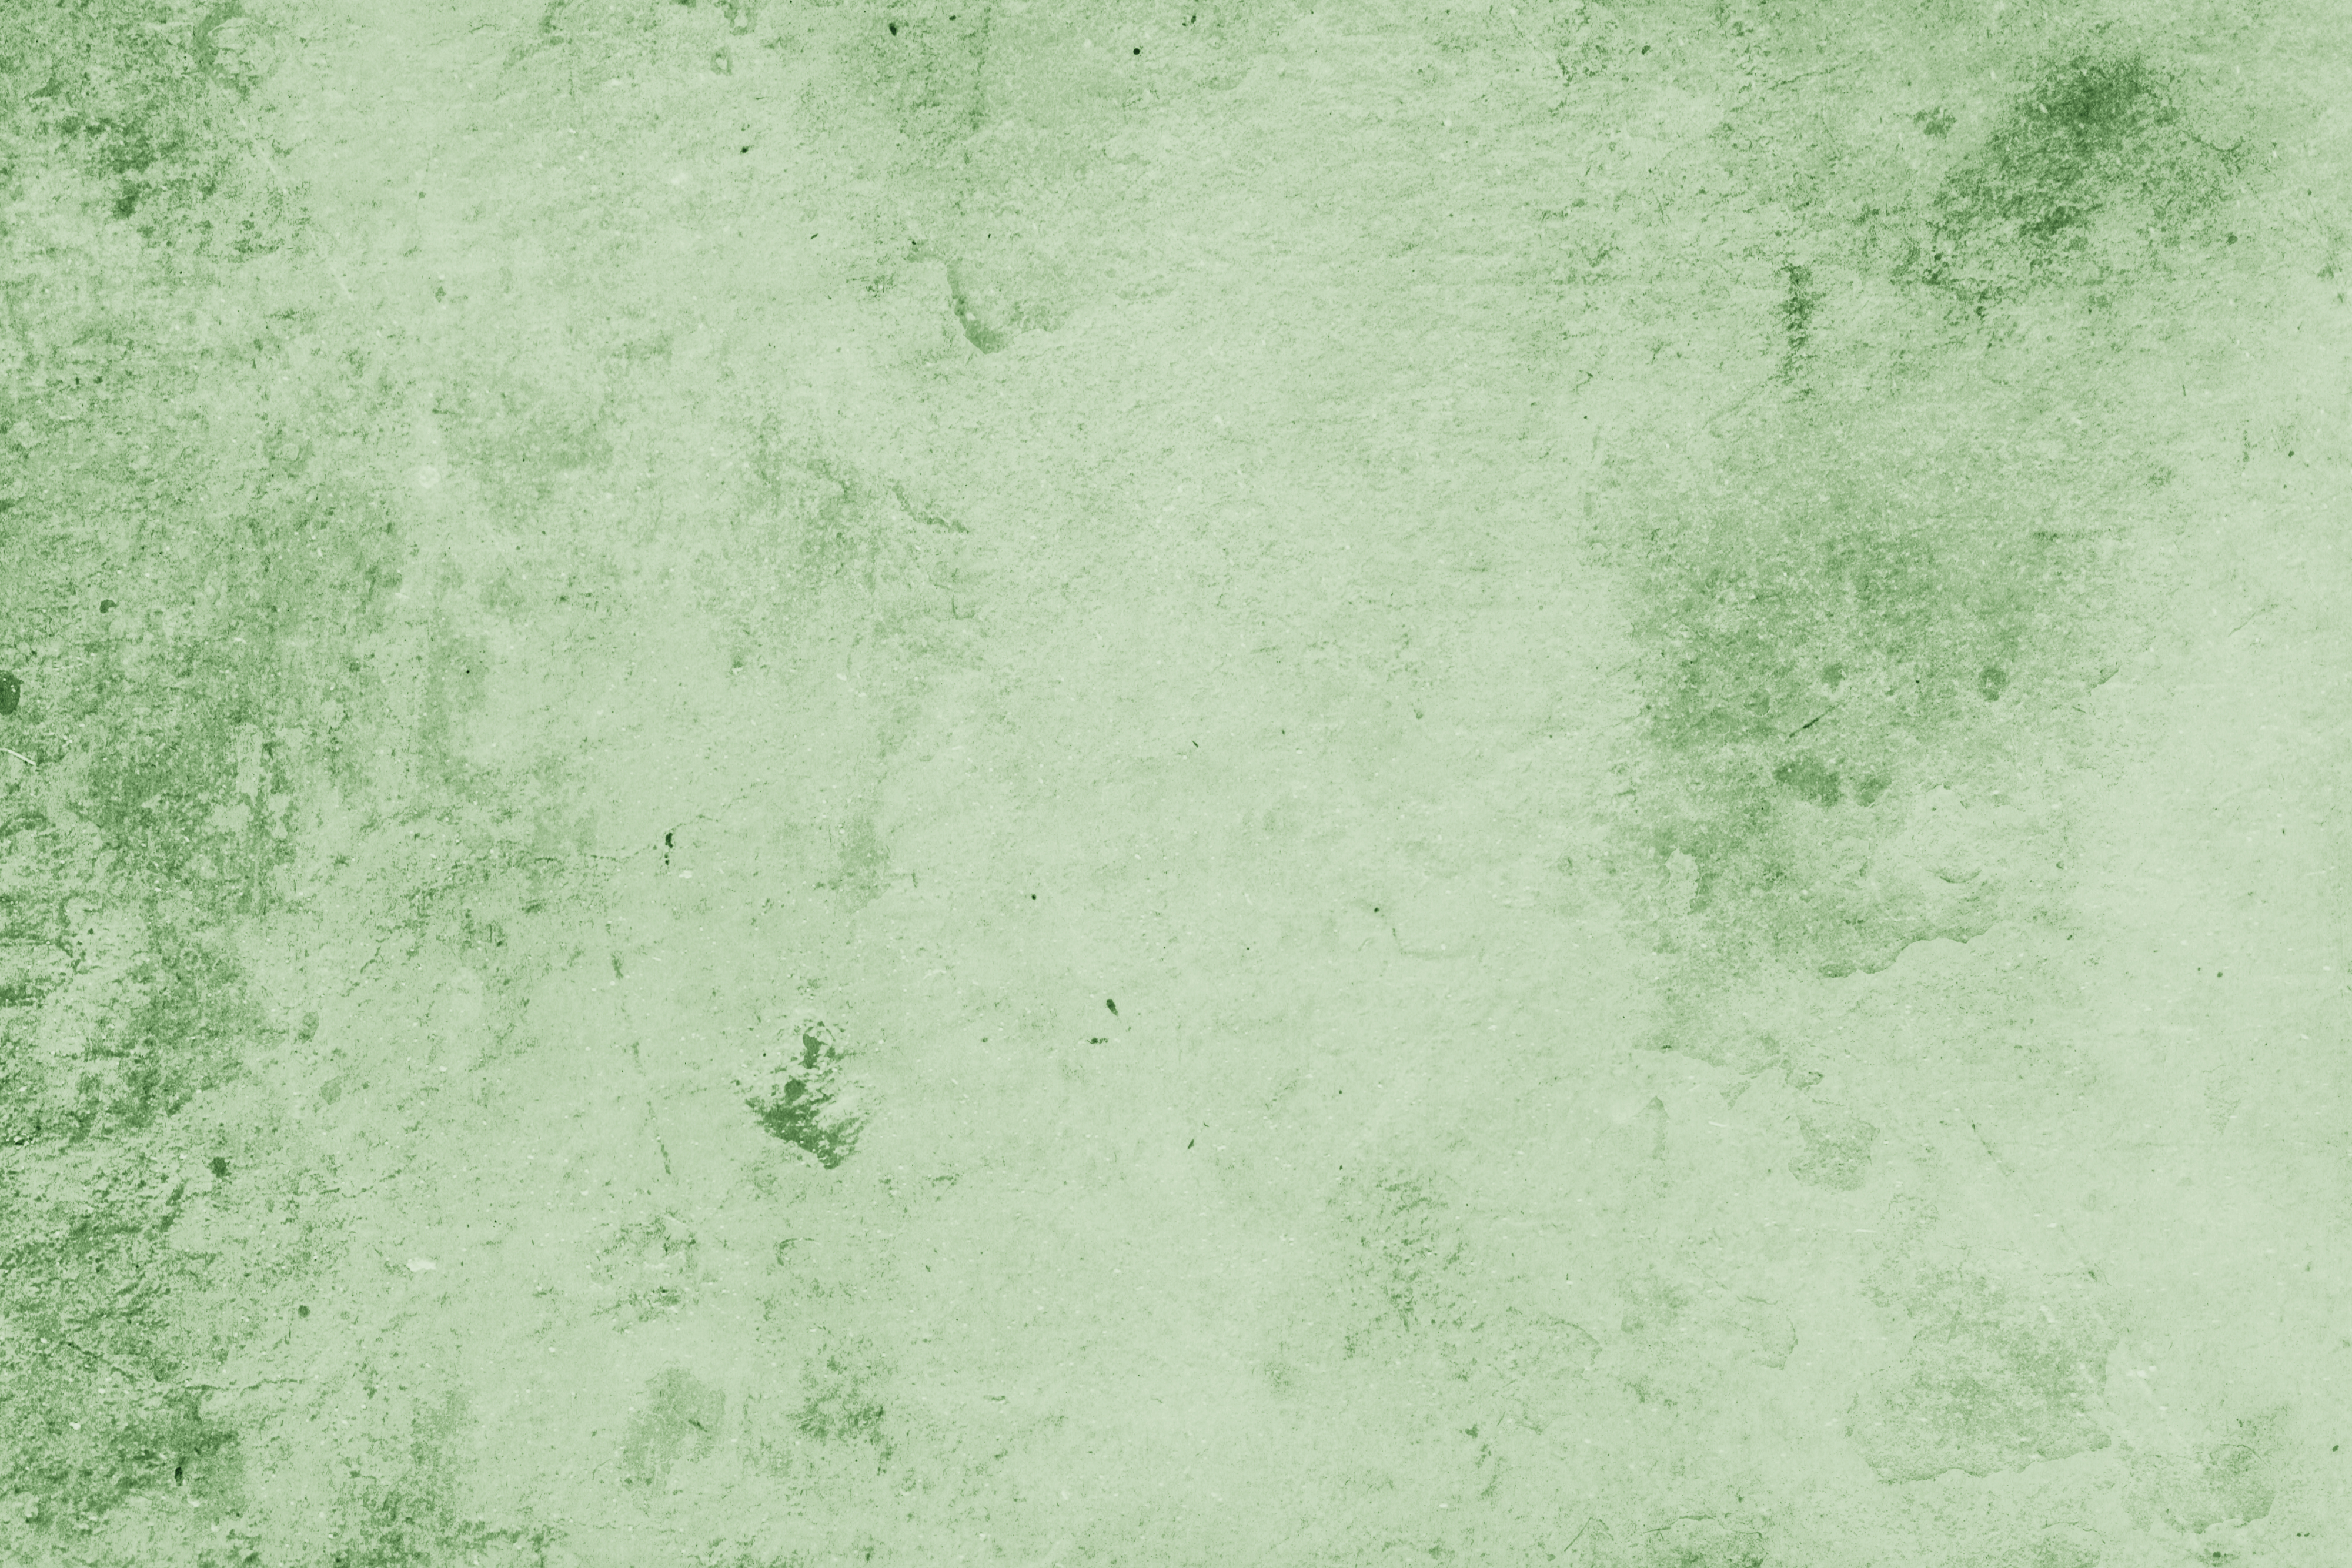 Subtle green grunge surface photo